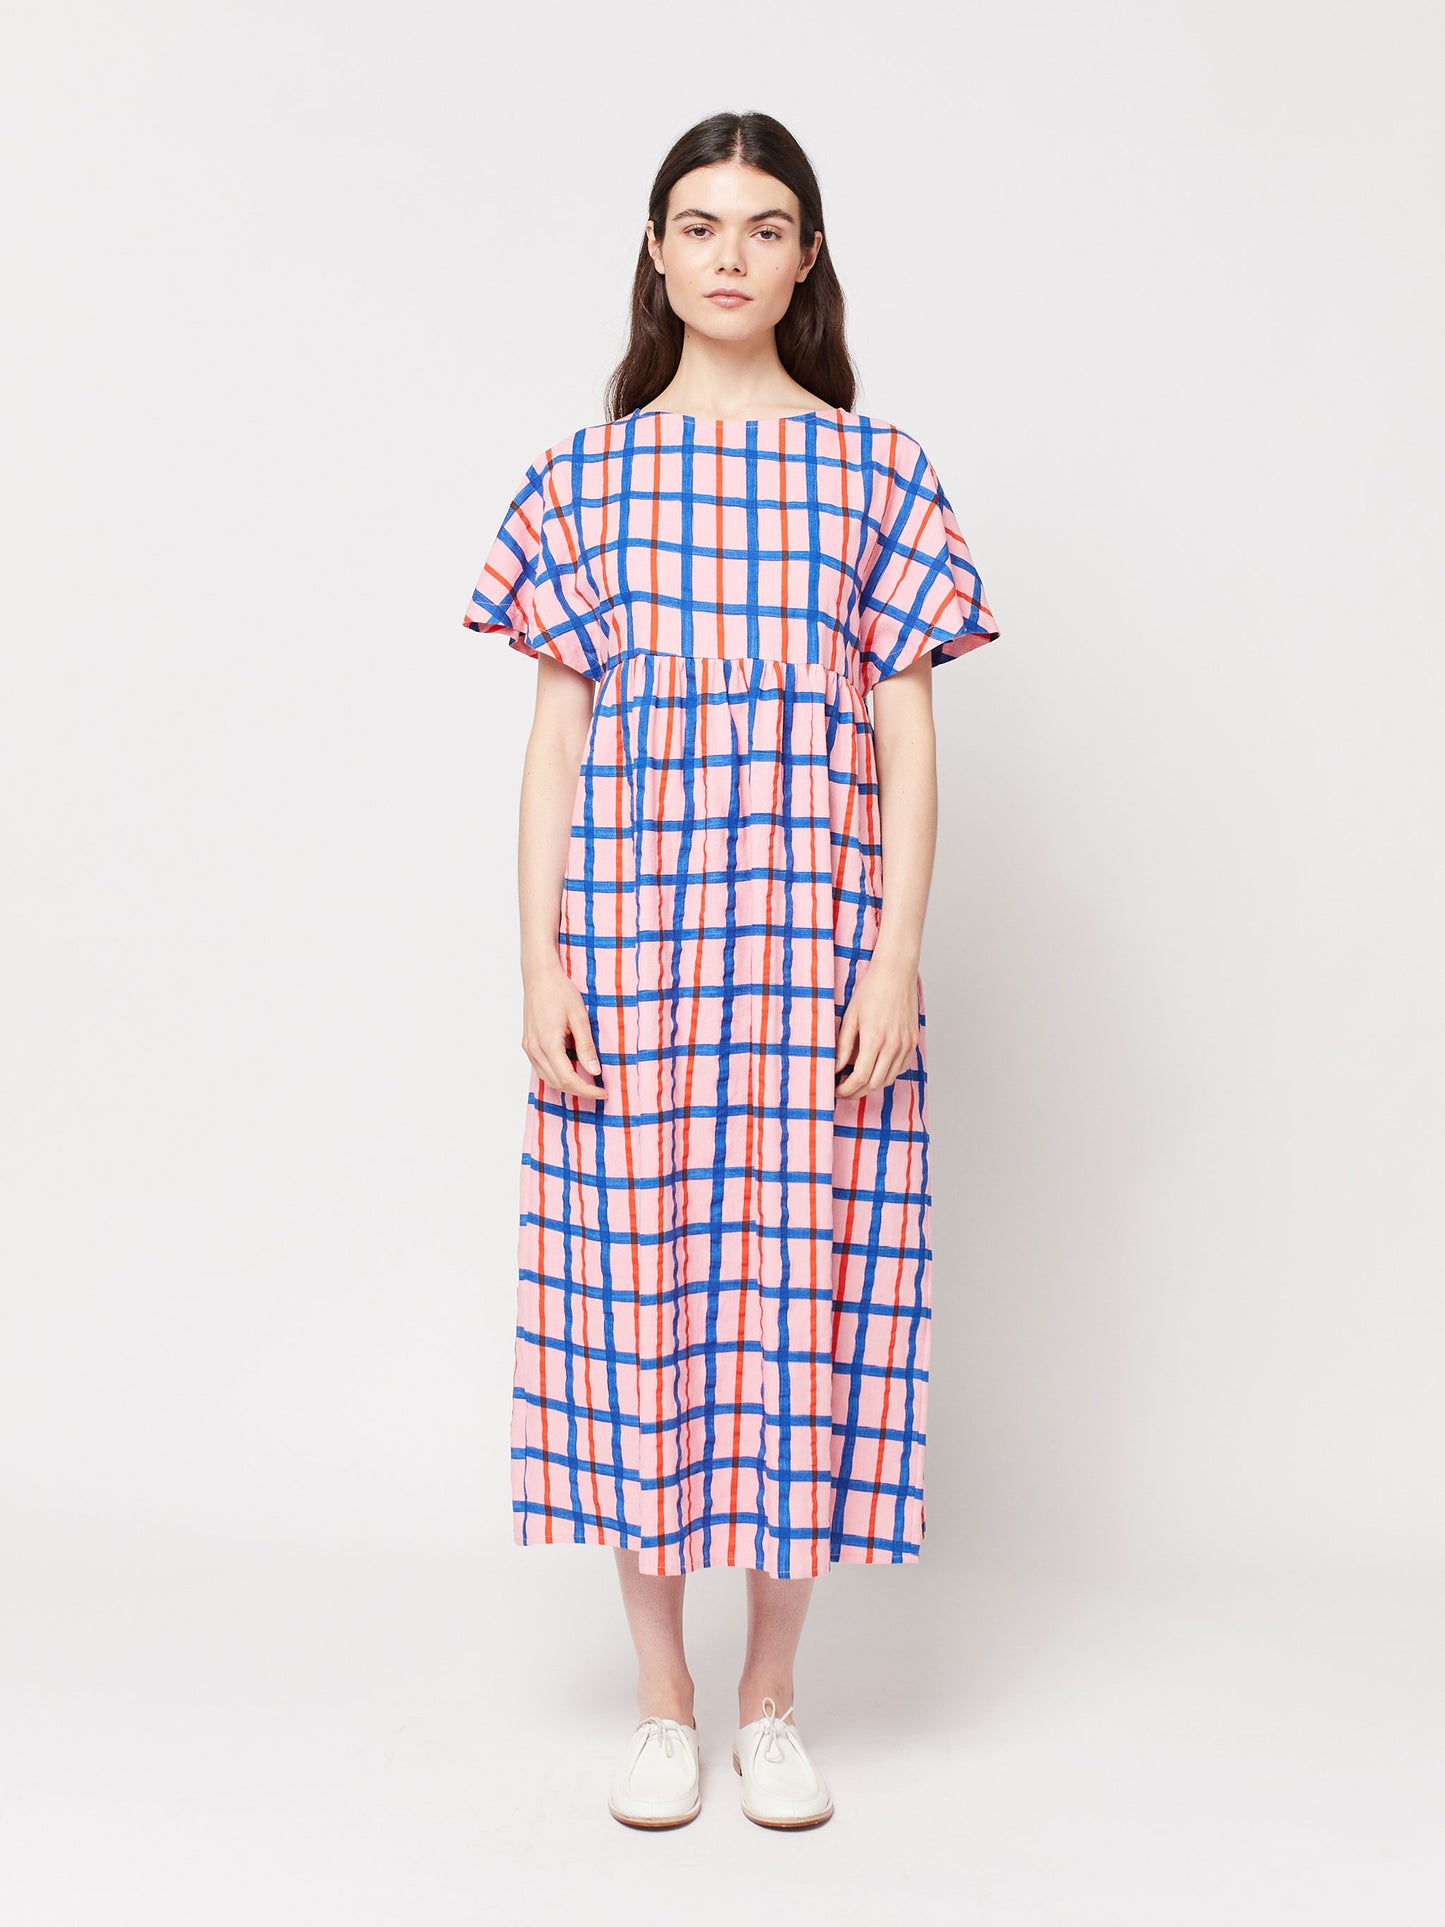 Multicolored checked print dress